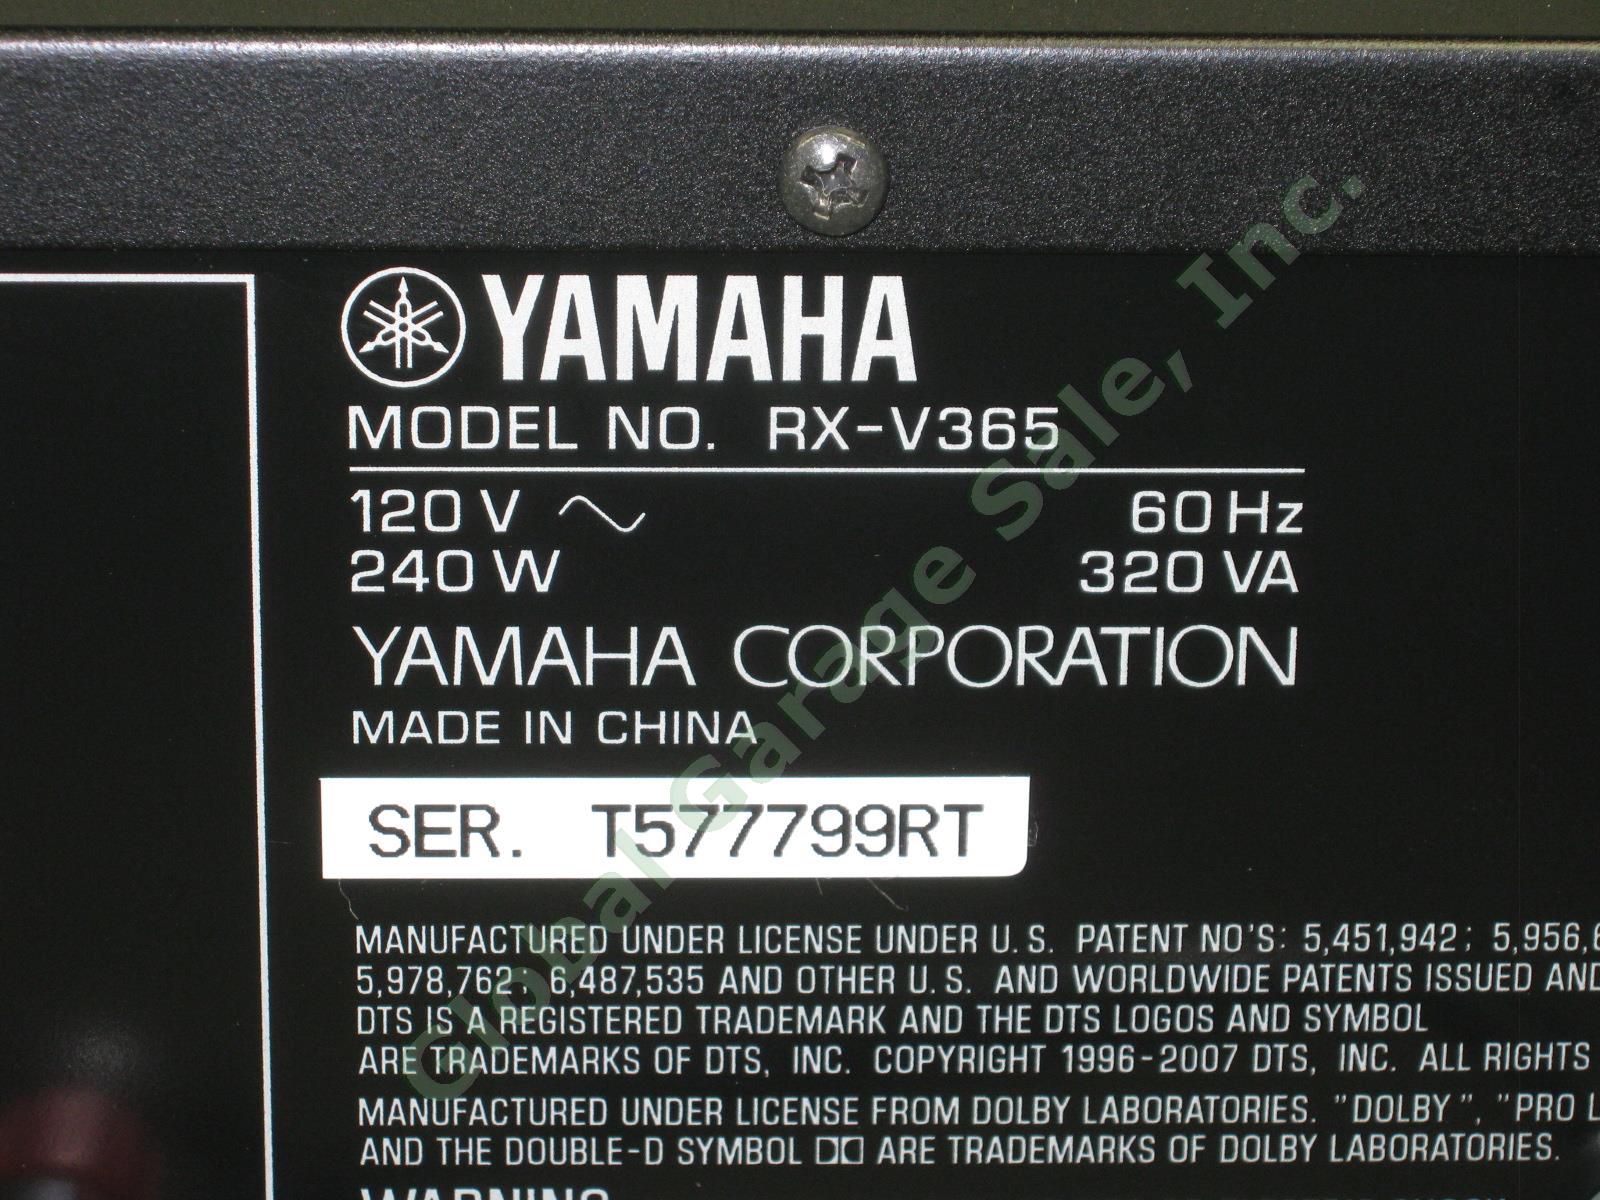 Yamaha RX-V365 500-Watt 5.1-channel Natural Sound Home Theater AV Receiver HDMI 7